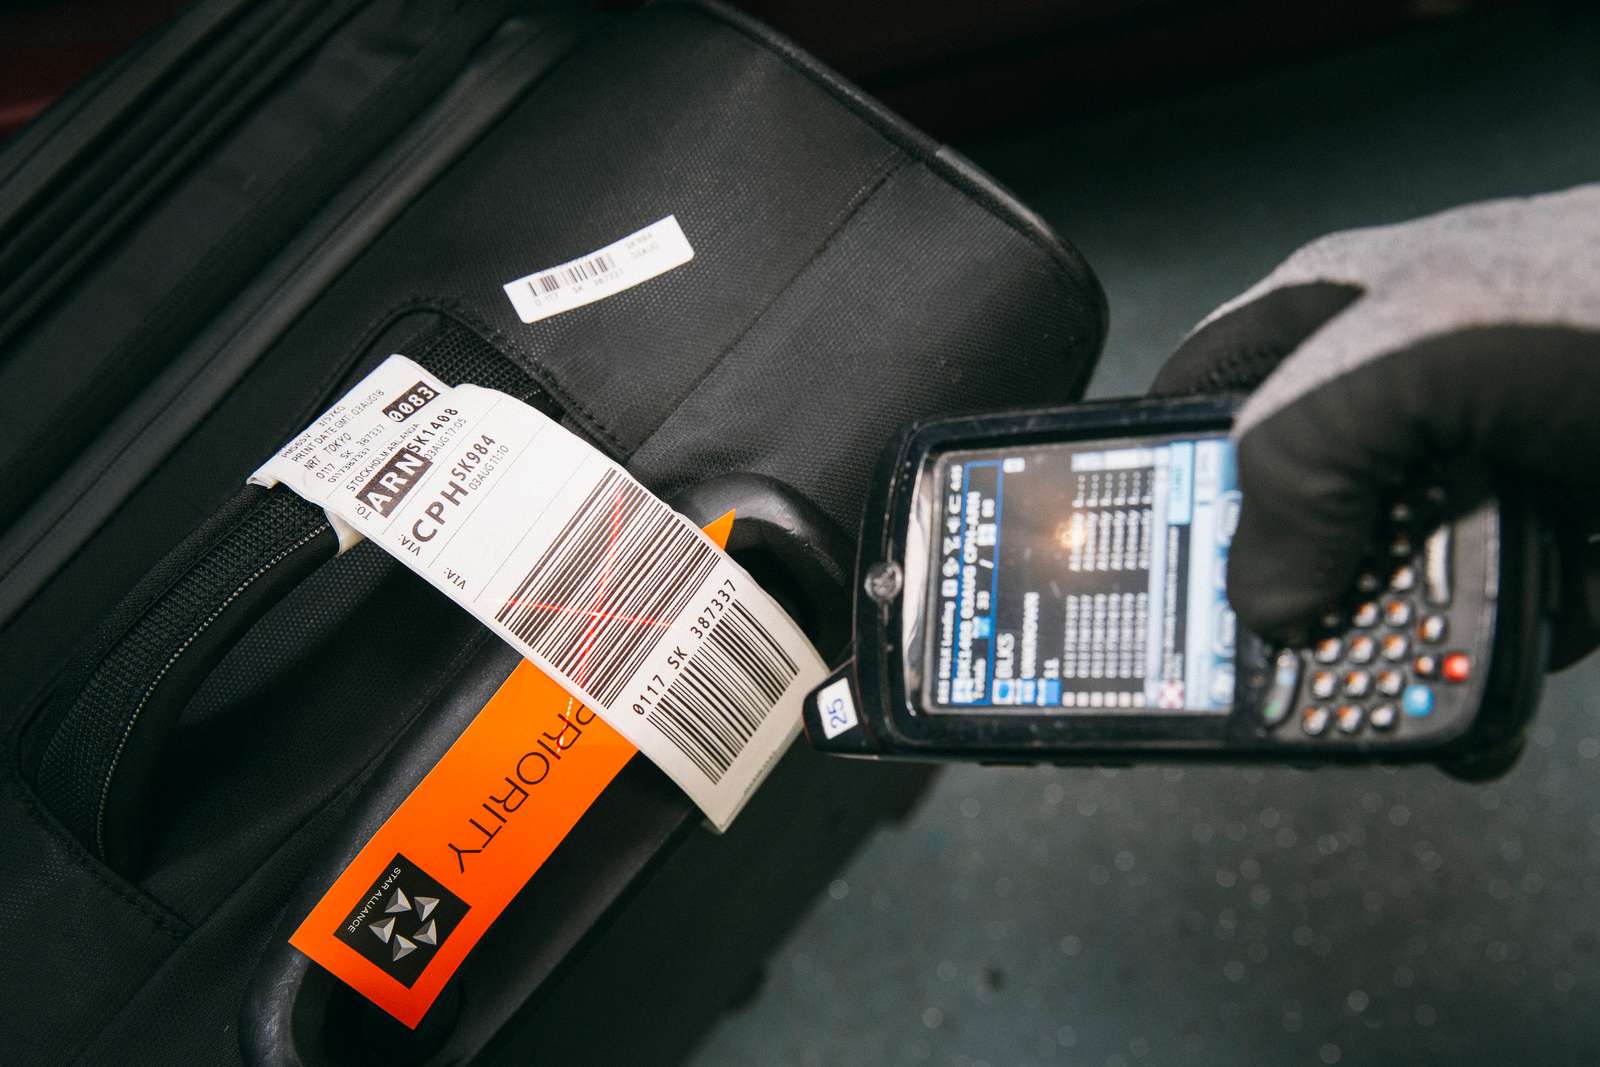 Luggage tag scanning